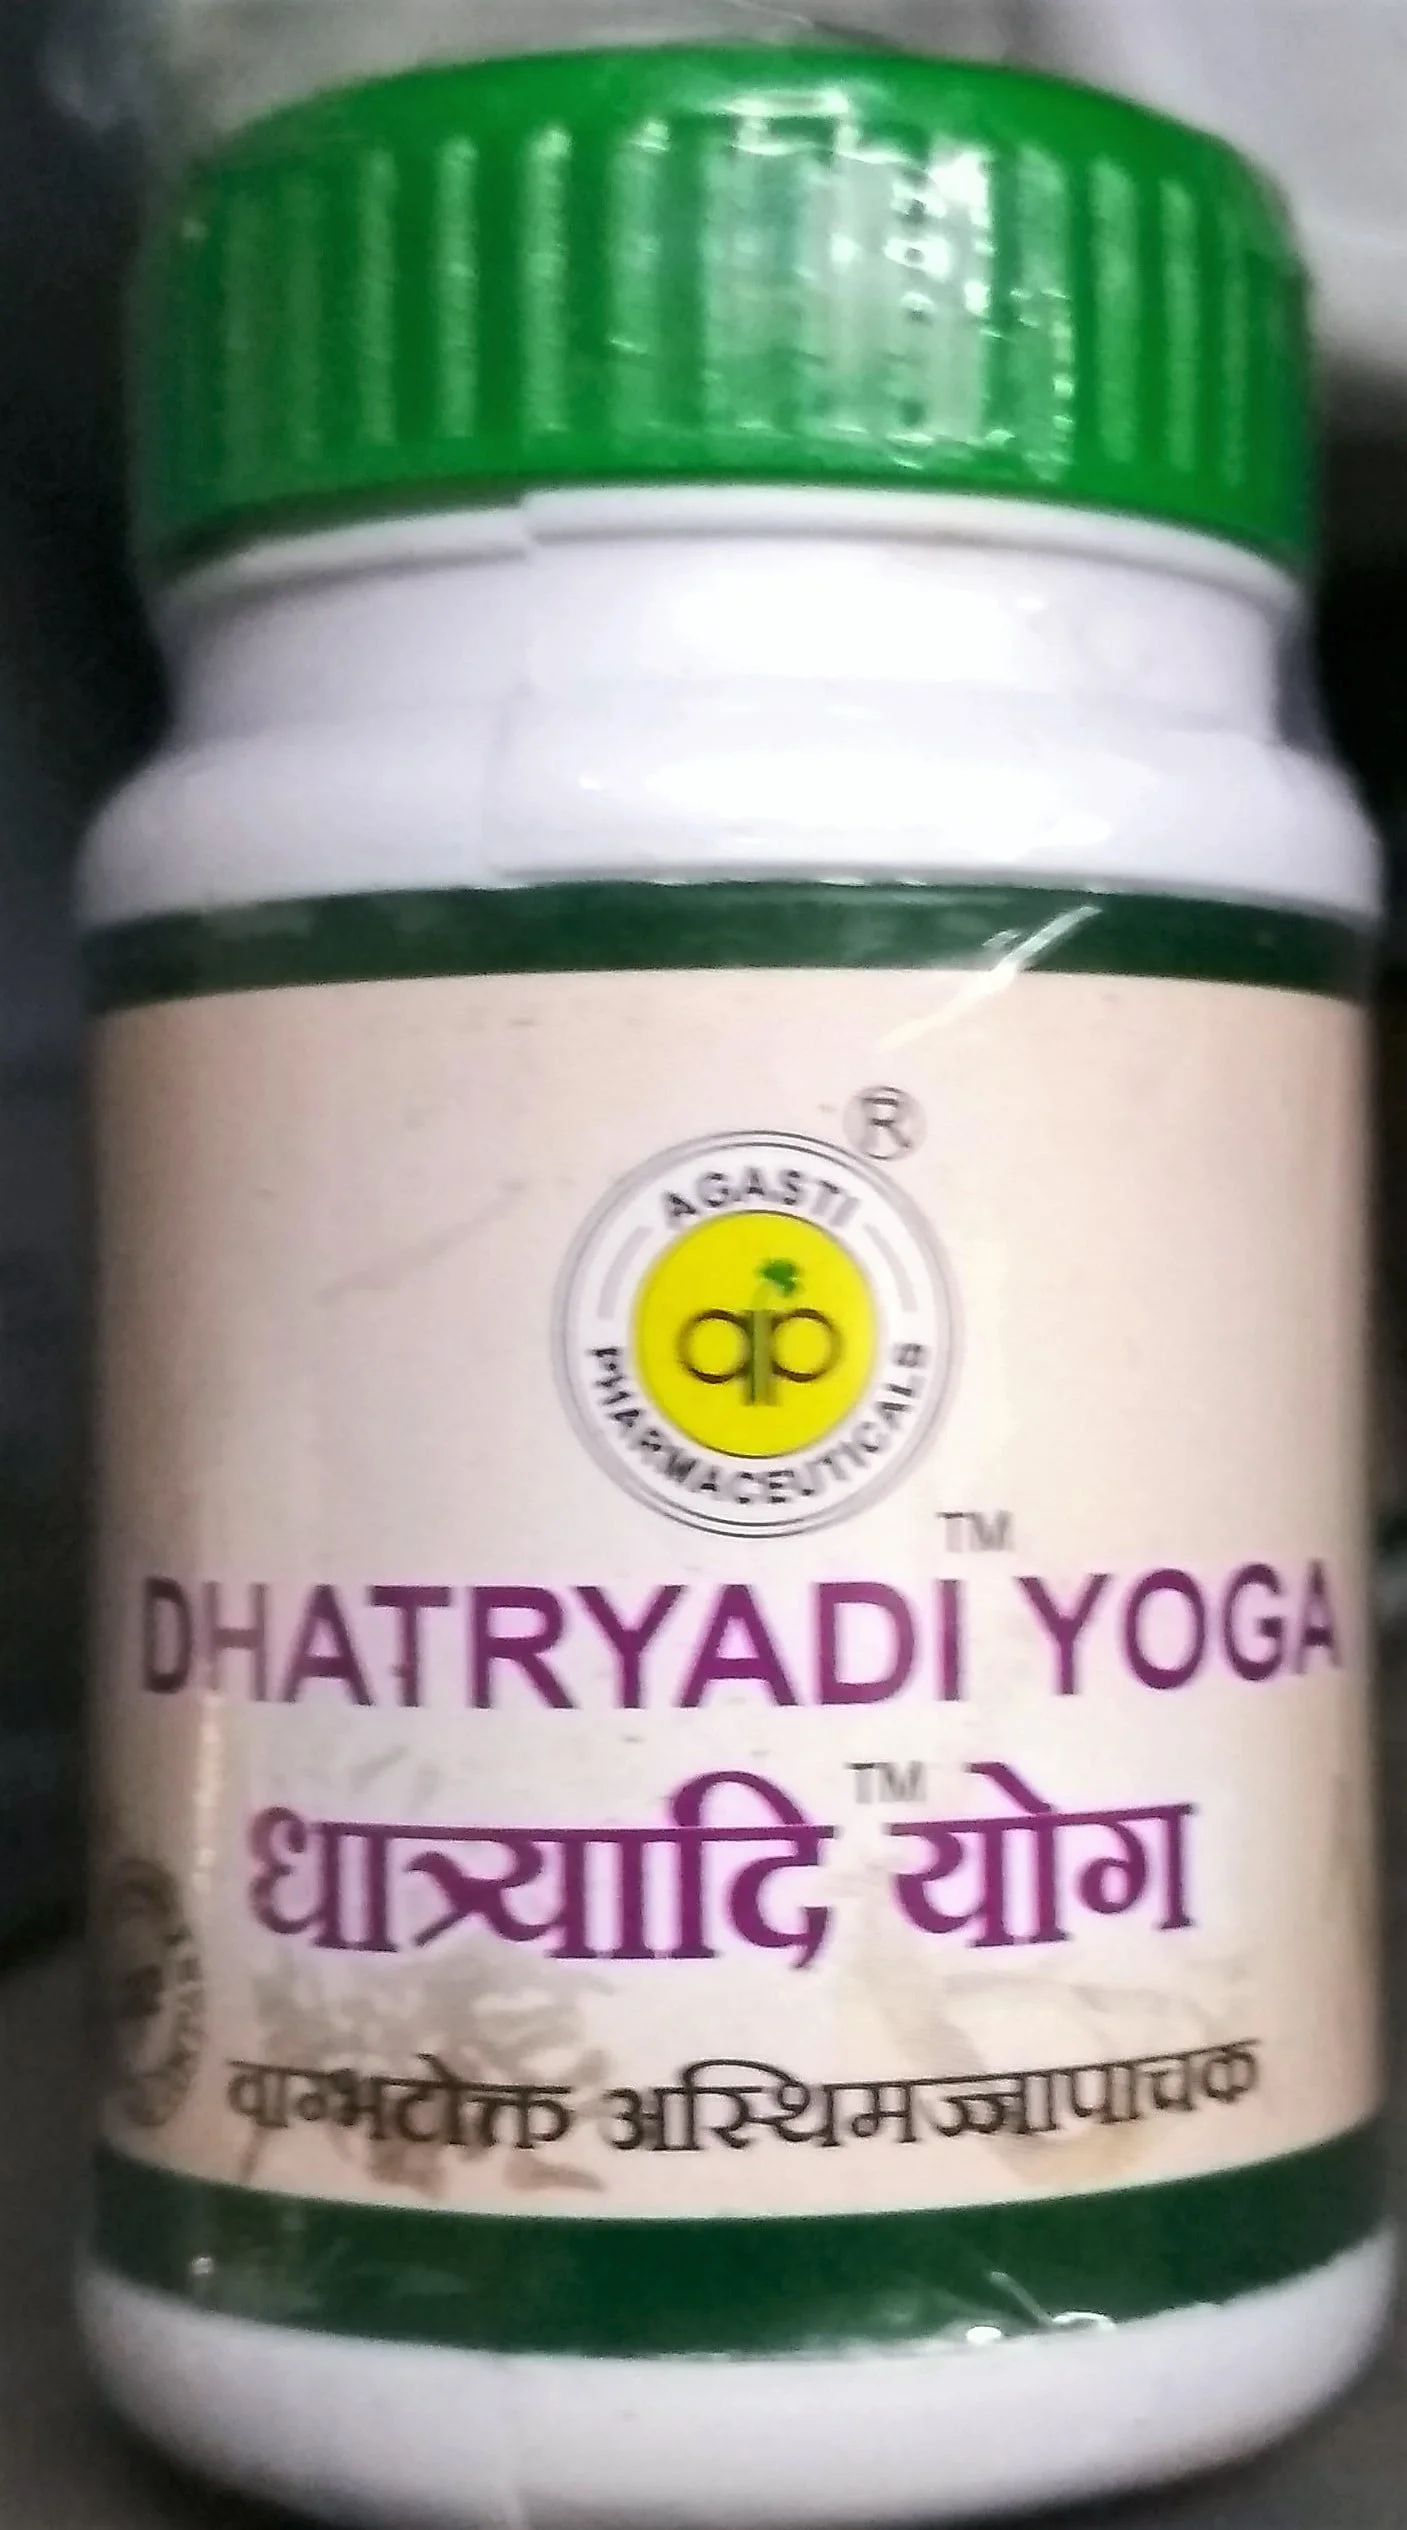 dhatryadi yog 500 gm 2000tablet upto 15% off agasti pharmaceuticals